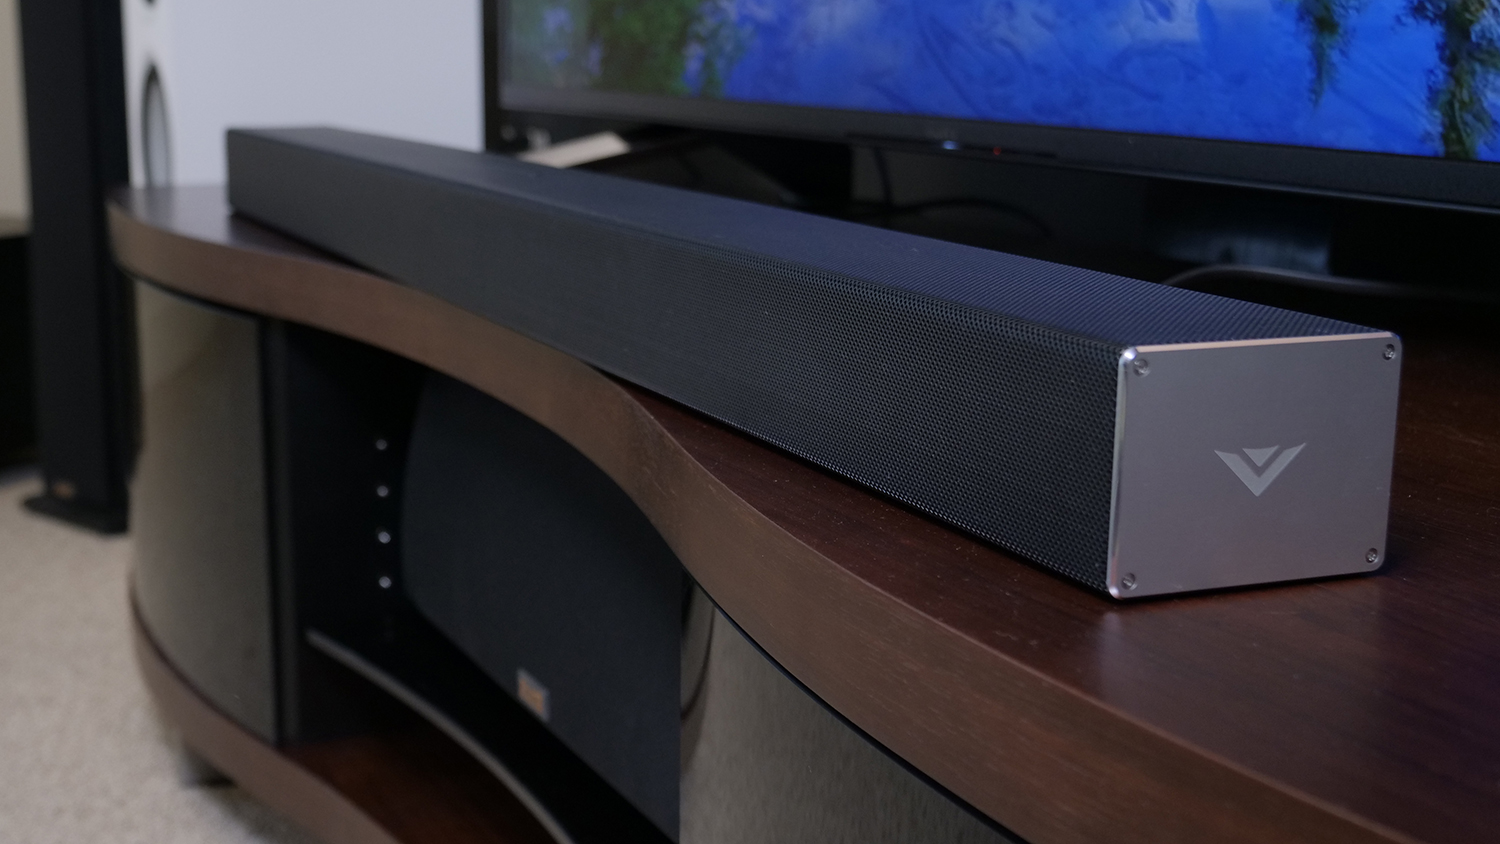 Vizio 5.1.4 Dolby Atmos Soundbar Home Theater System Review - SB36541-G6